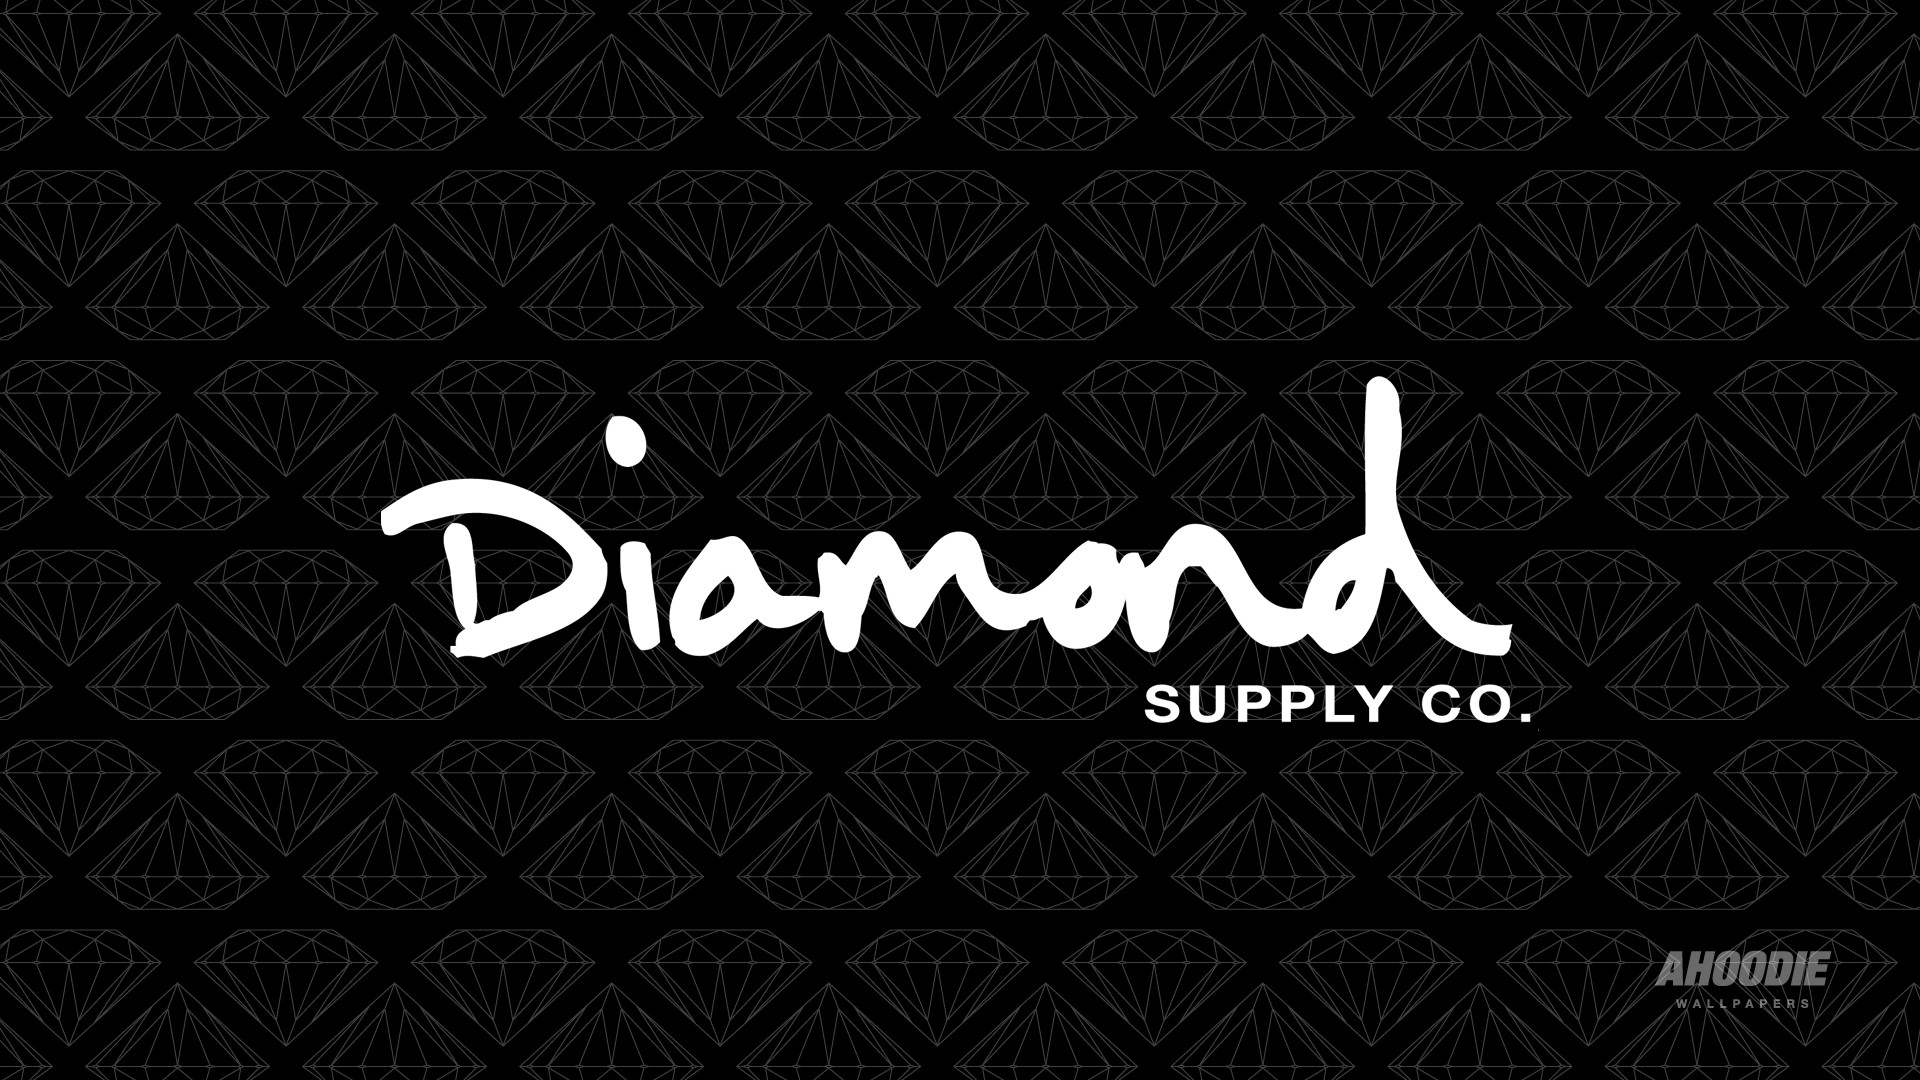 1920x1080 Diamond Supply Co wallpaper 201613